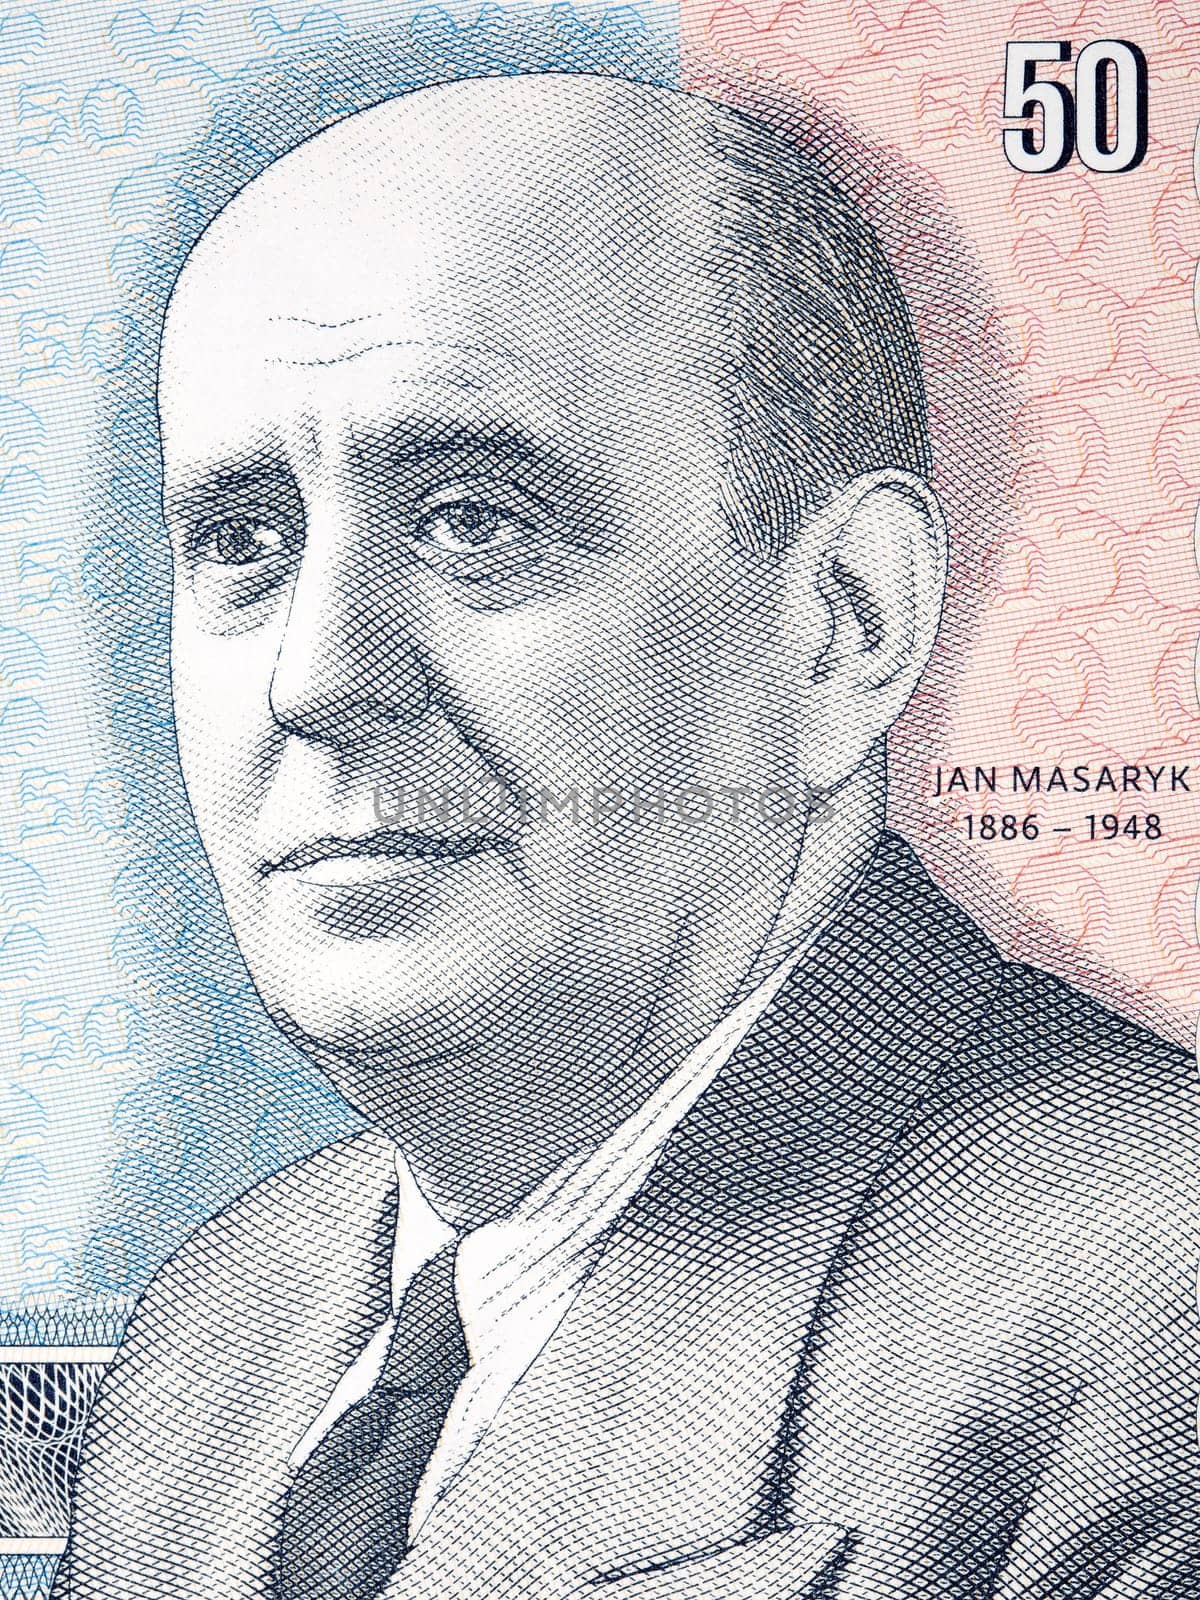 Jan Masaryk a portrait from money by johan10